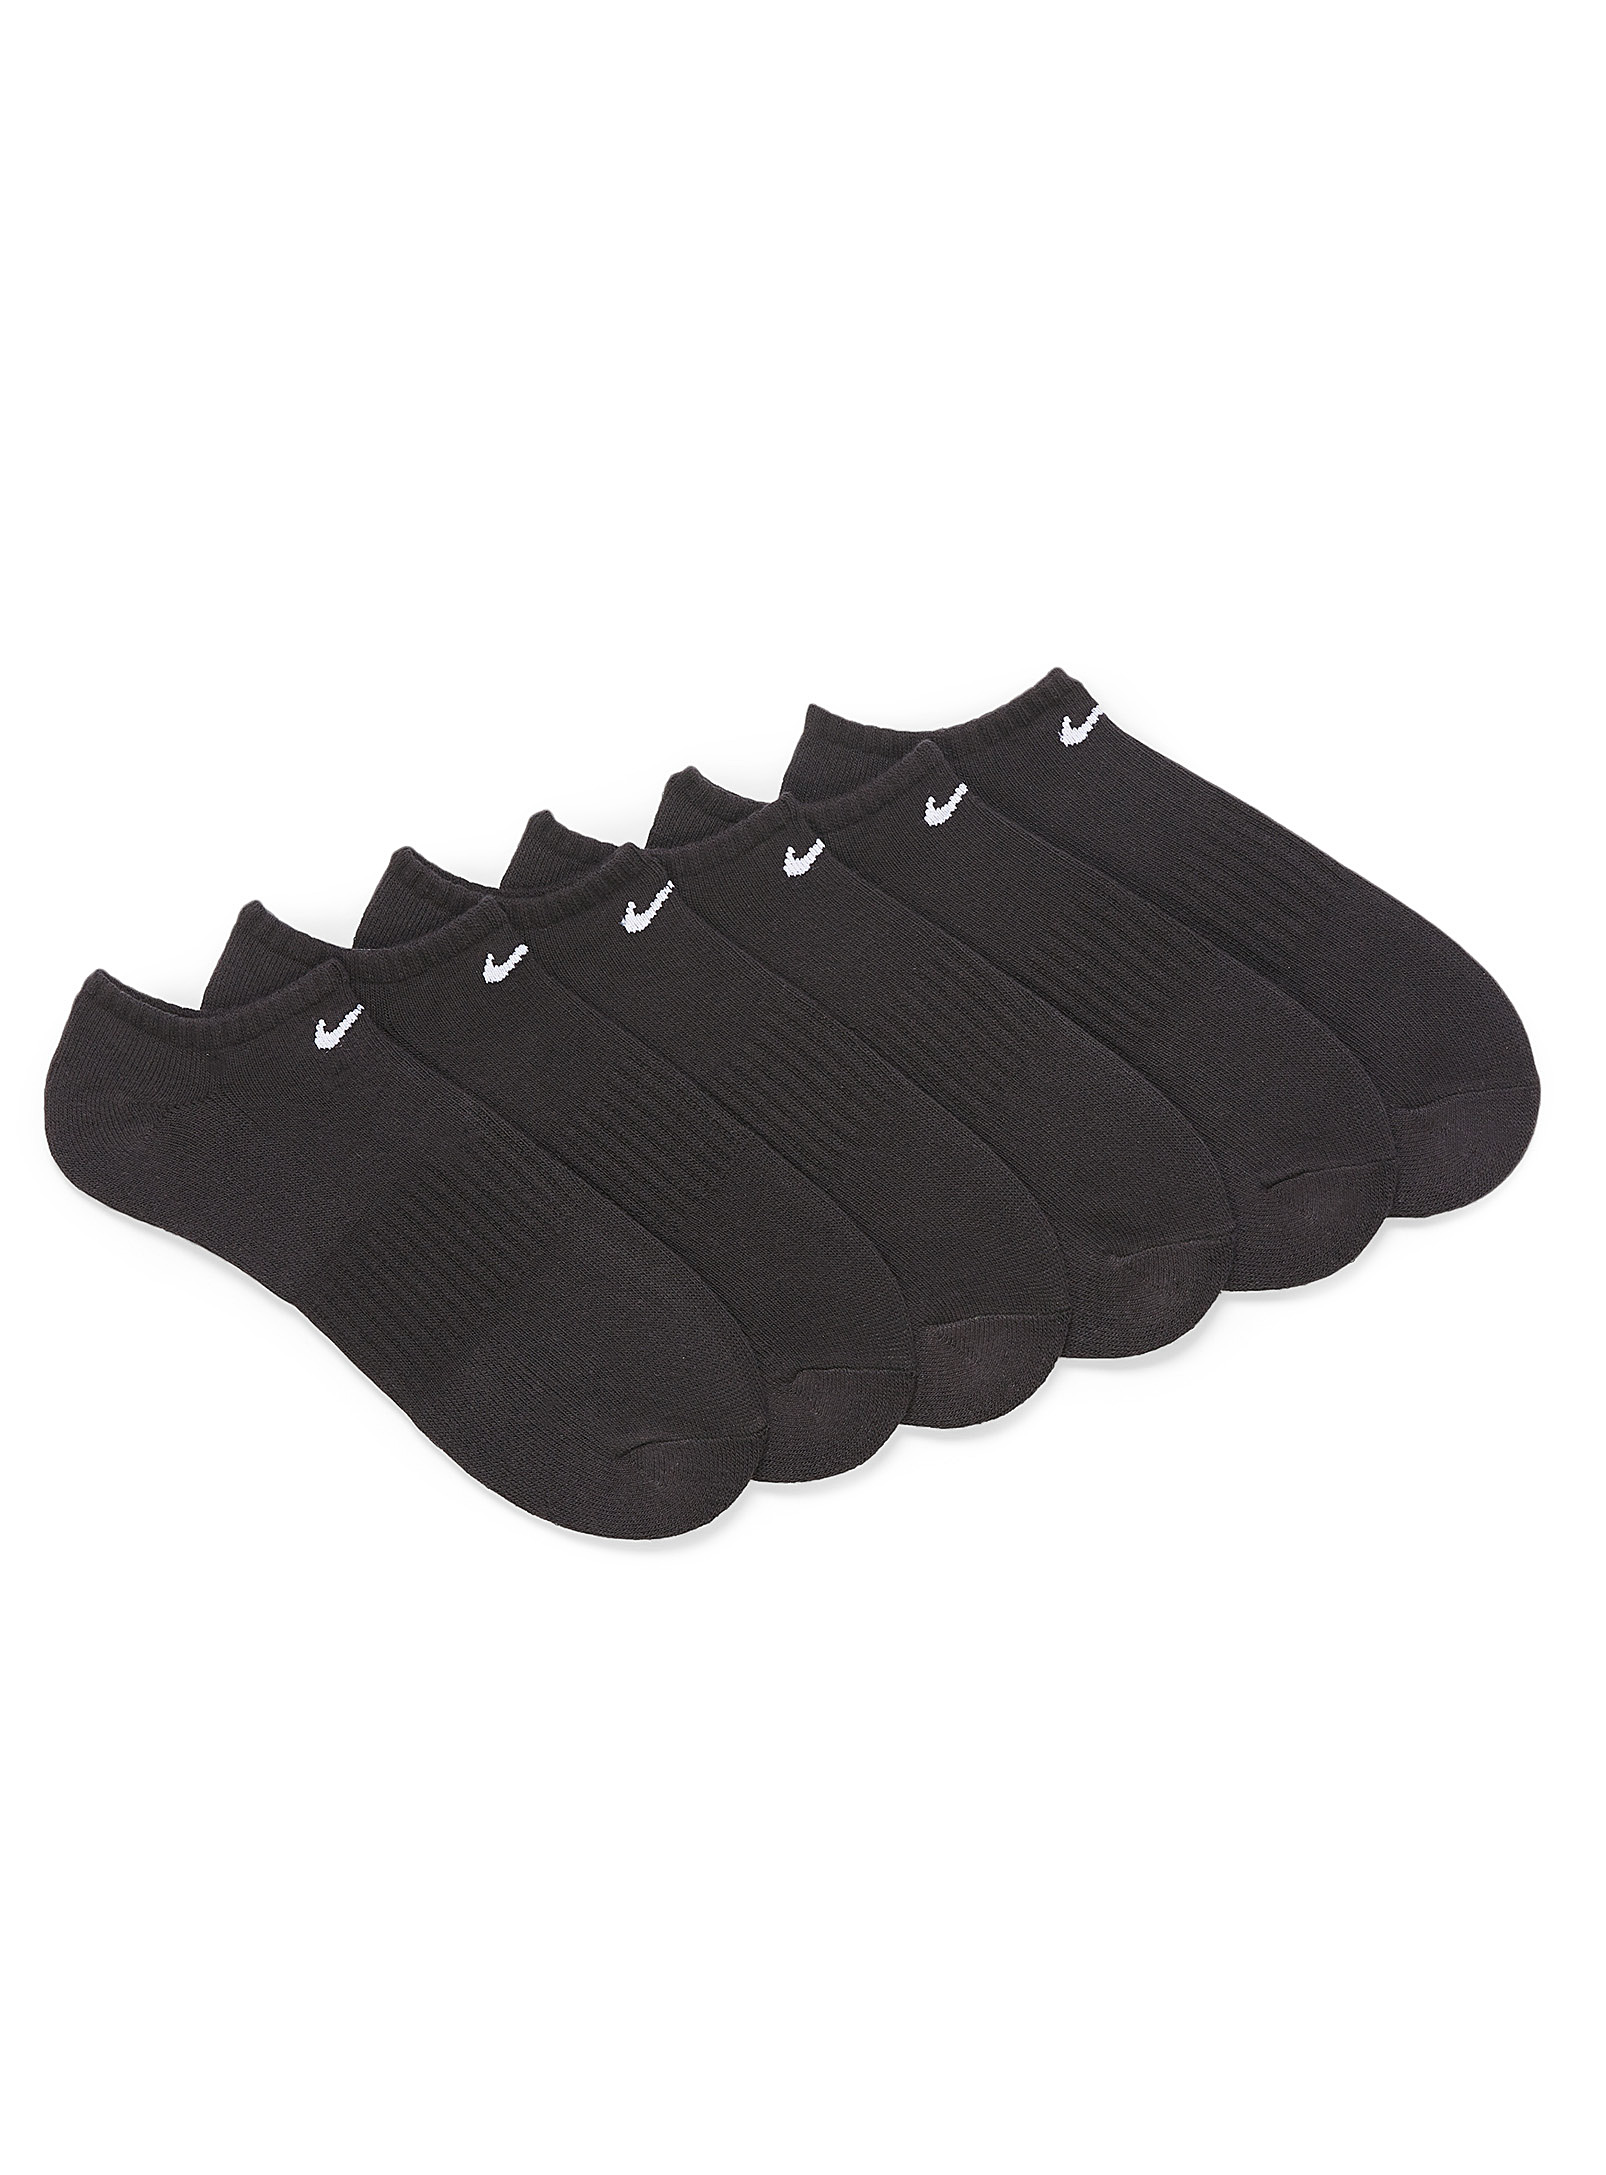 Nike Everyday Ped Socks 6-pack In Black